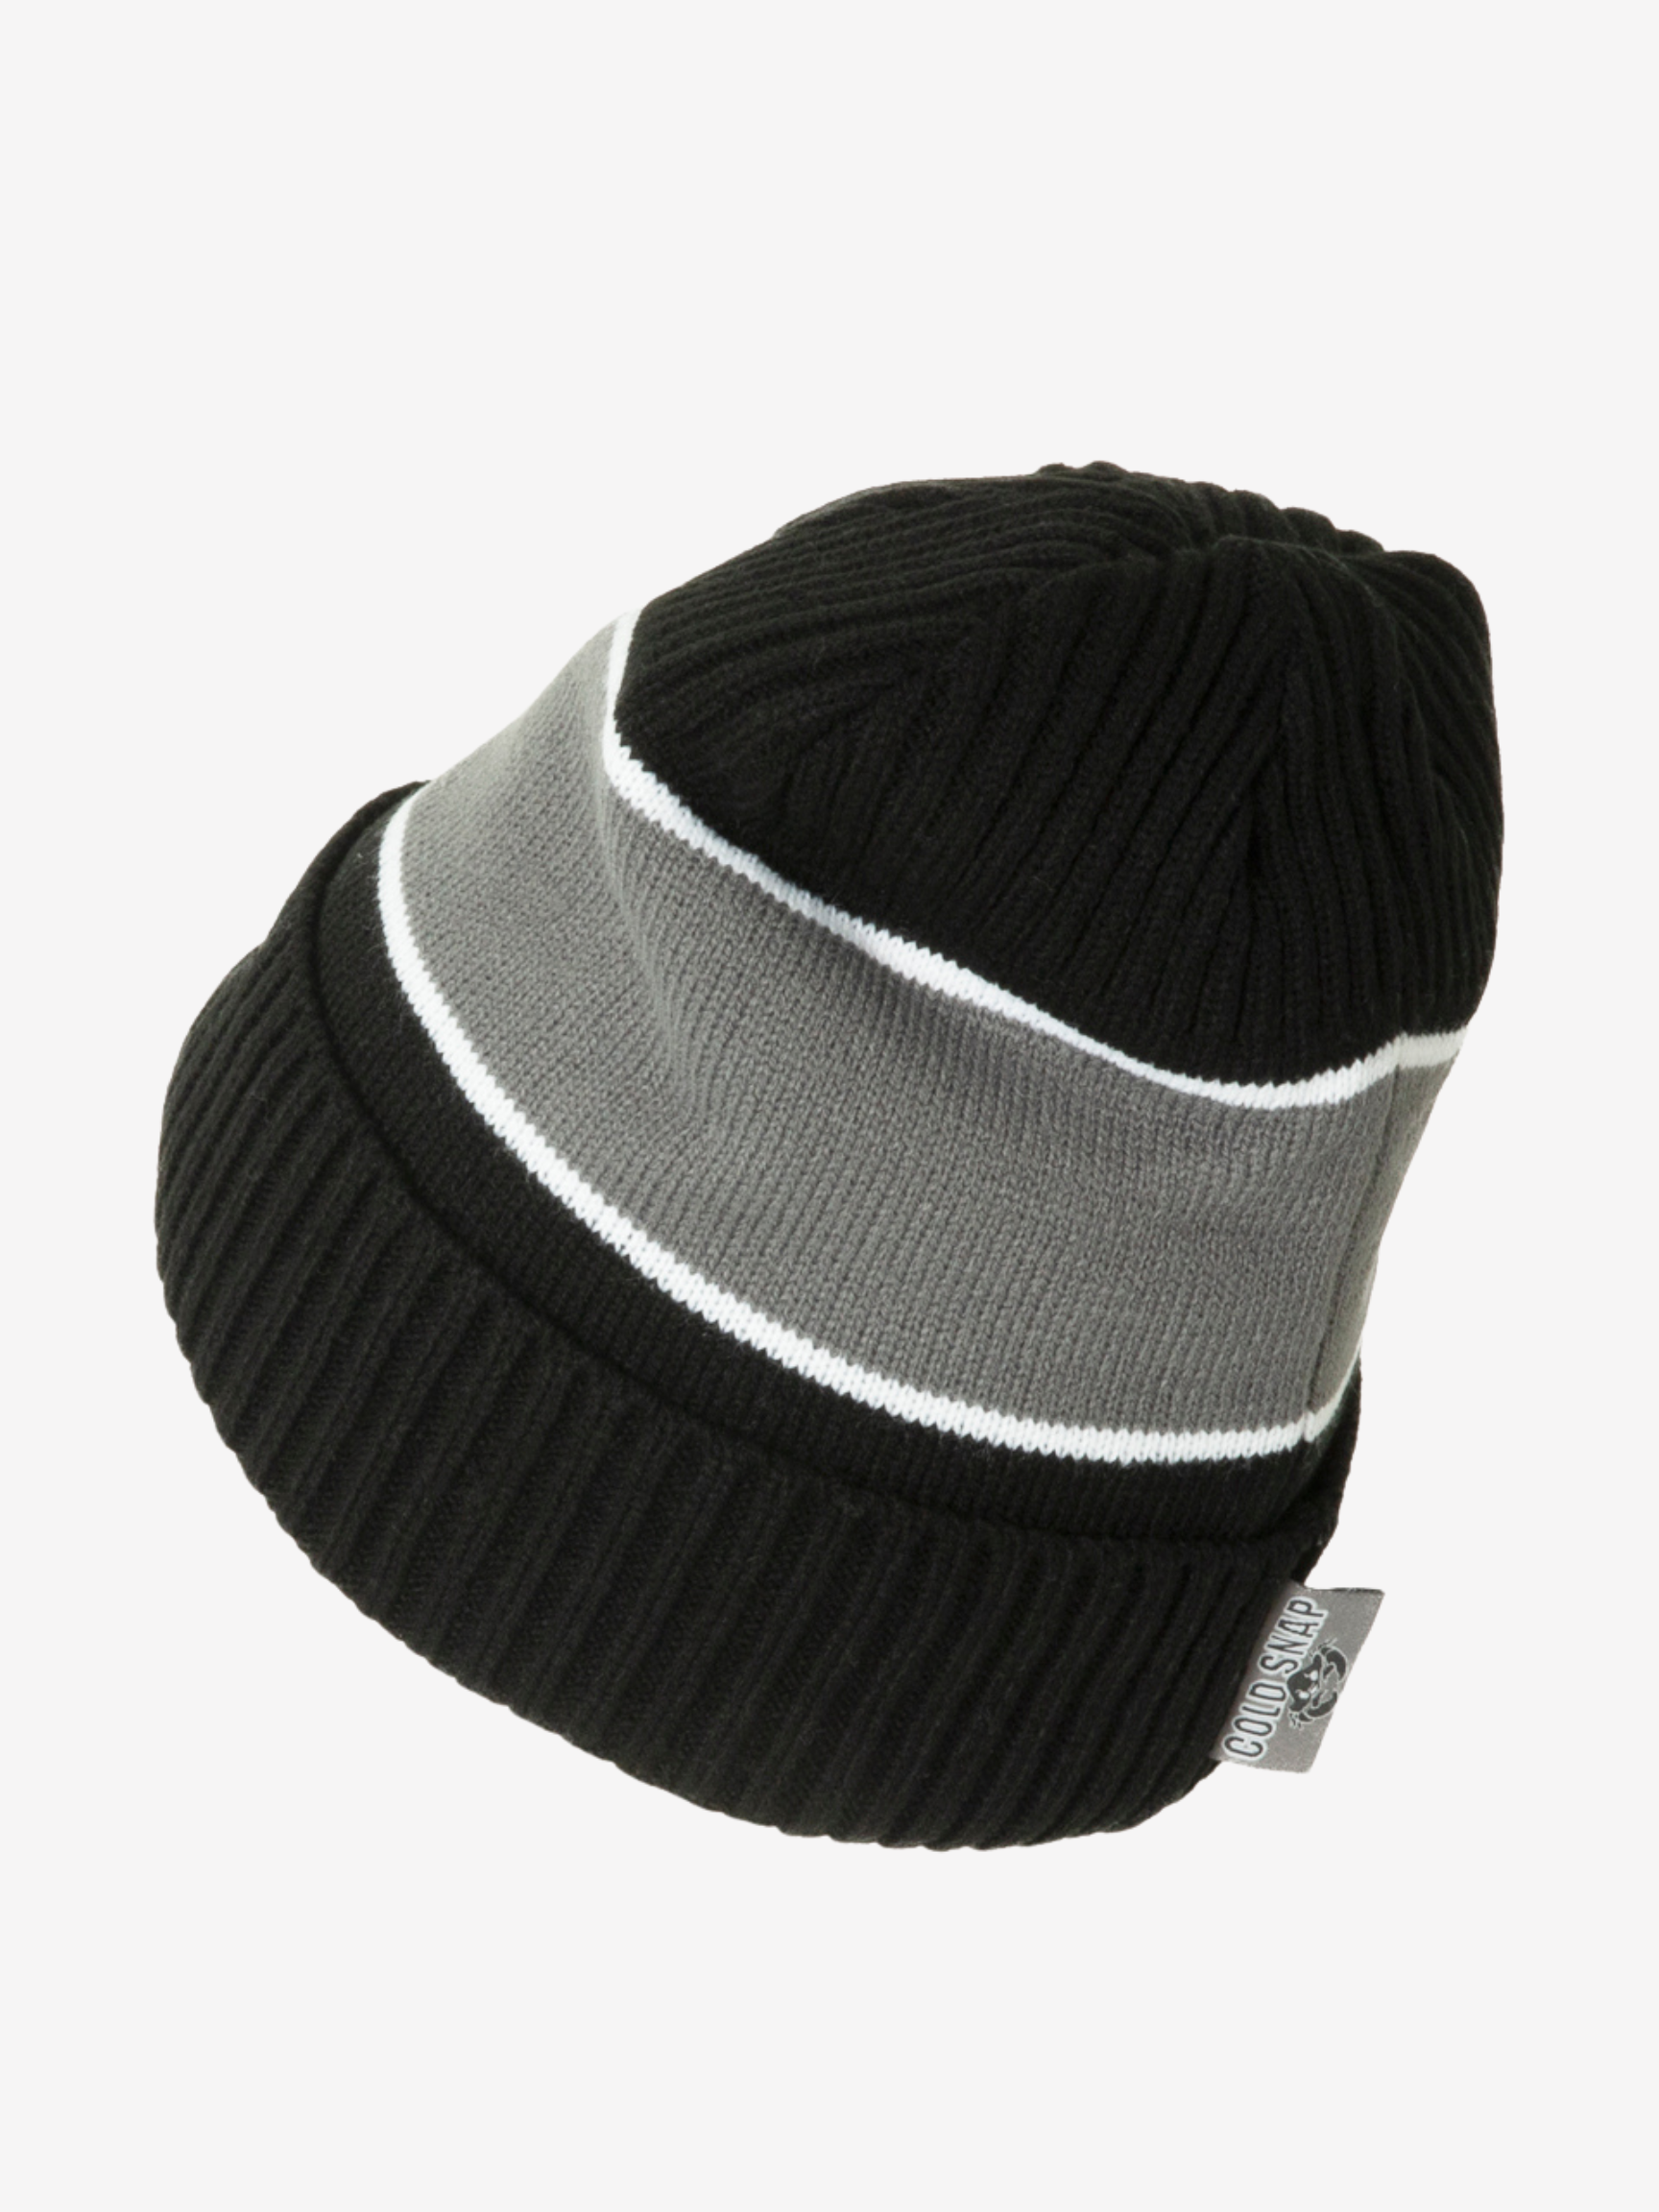 Stocking Cap- Gray/Black